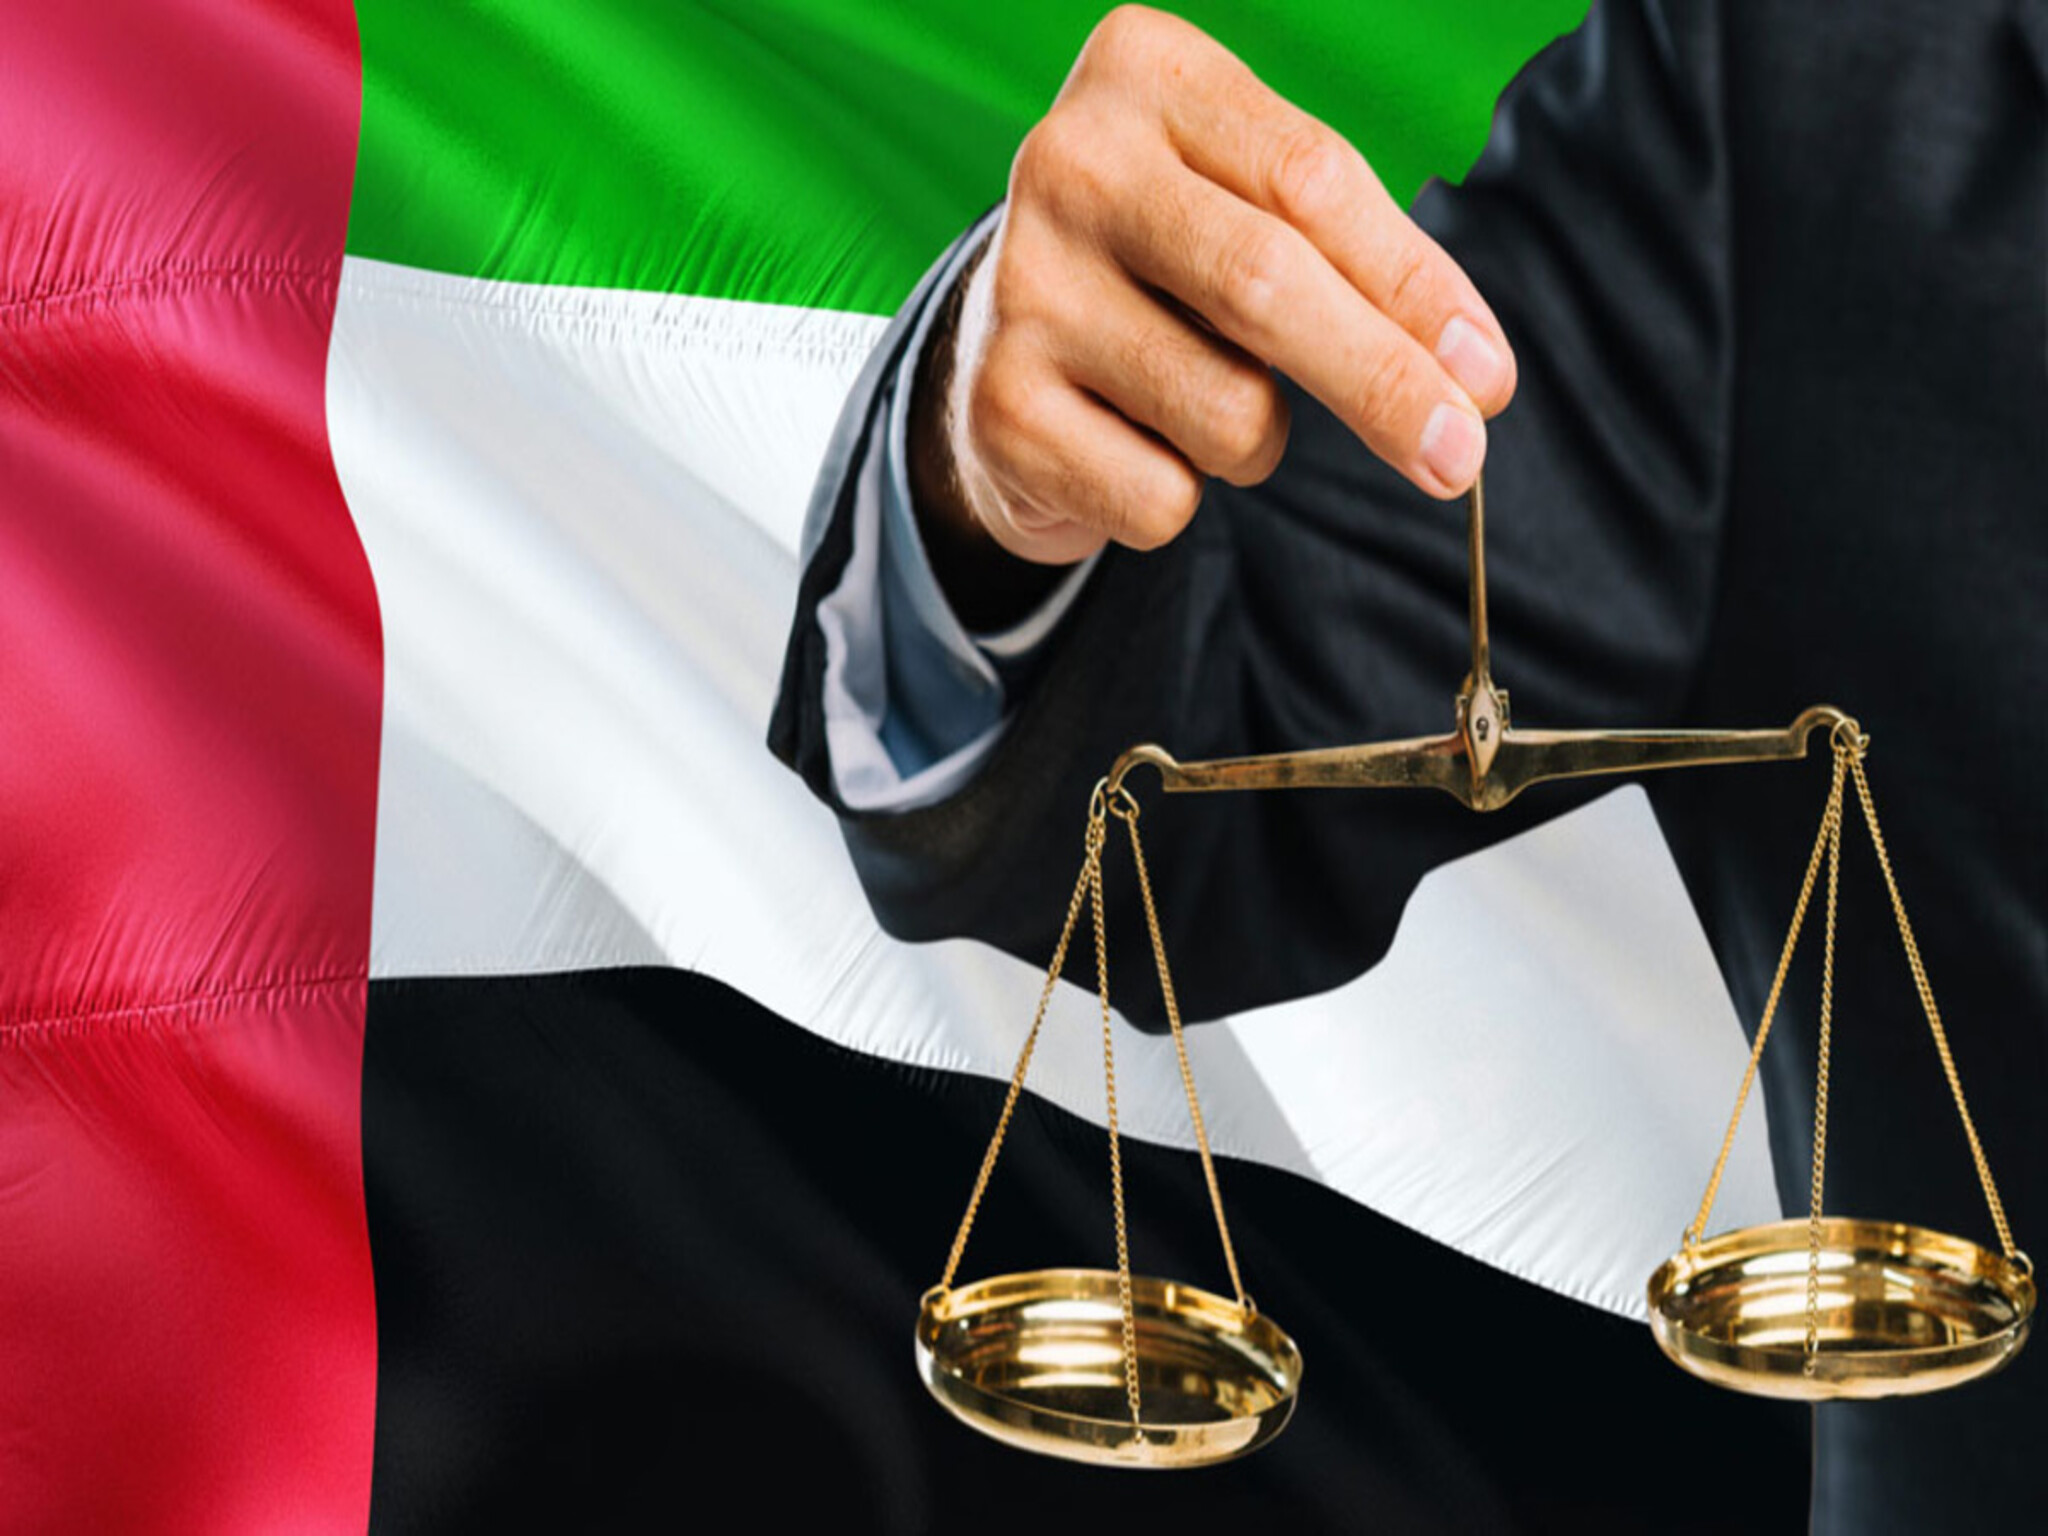 Dubai Civil Court Upholds AED 200,000 Compensation in Fatal Accident